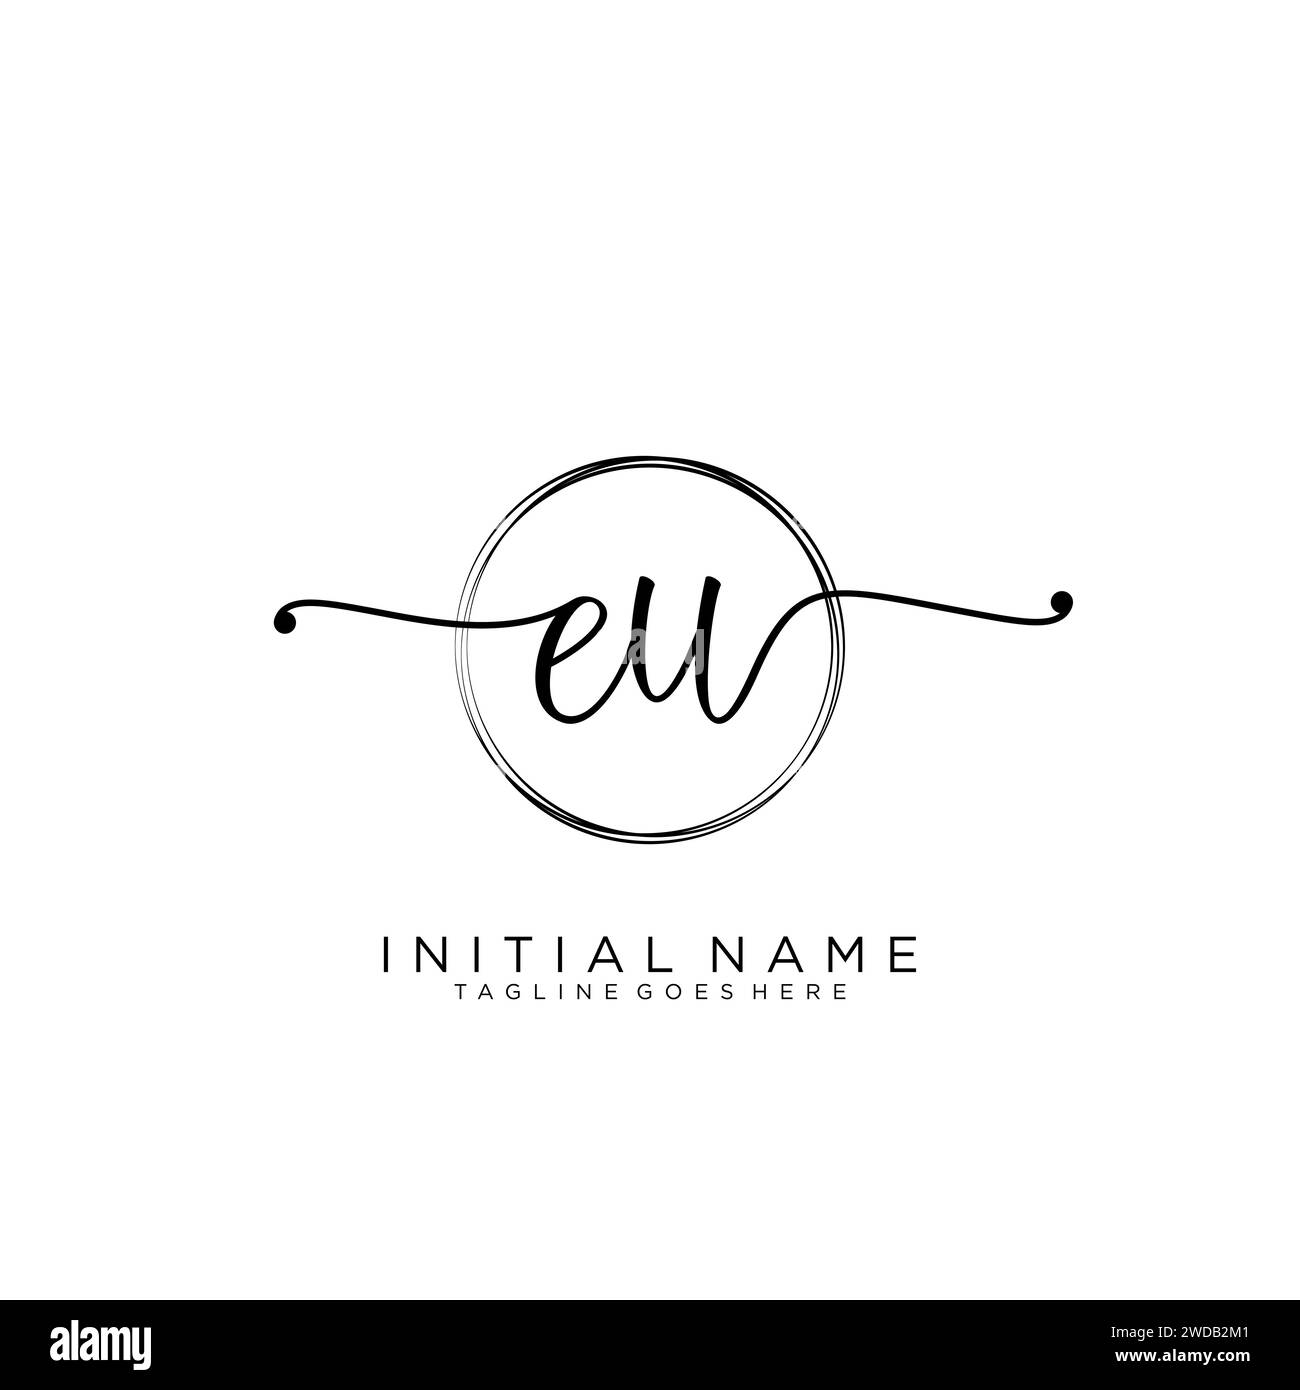 EU Initial handwriting logo with circle Stock Vector